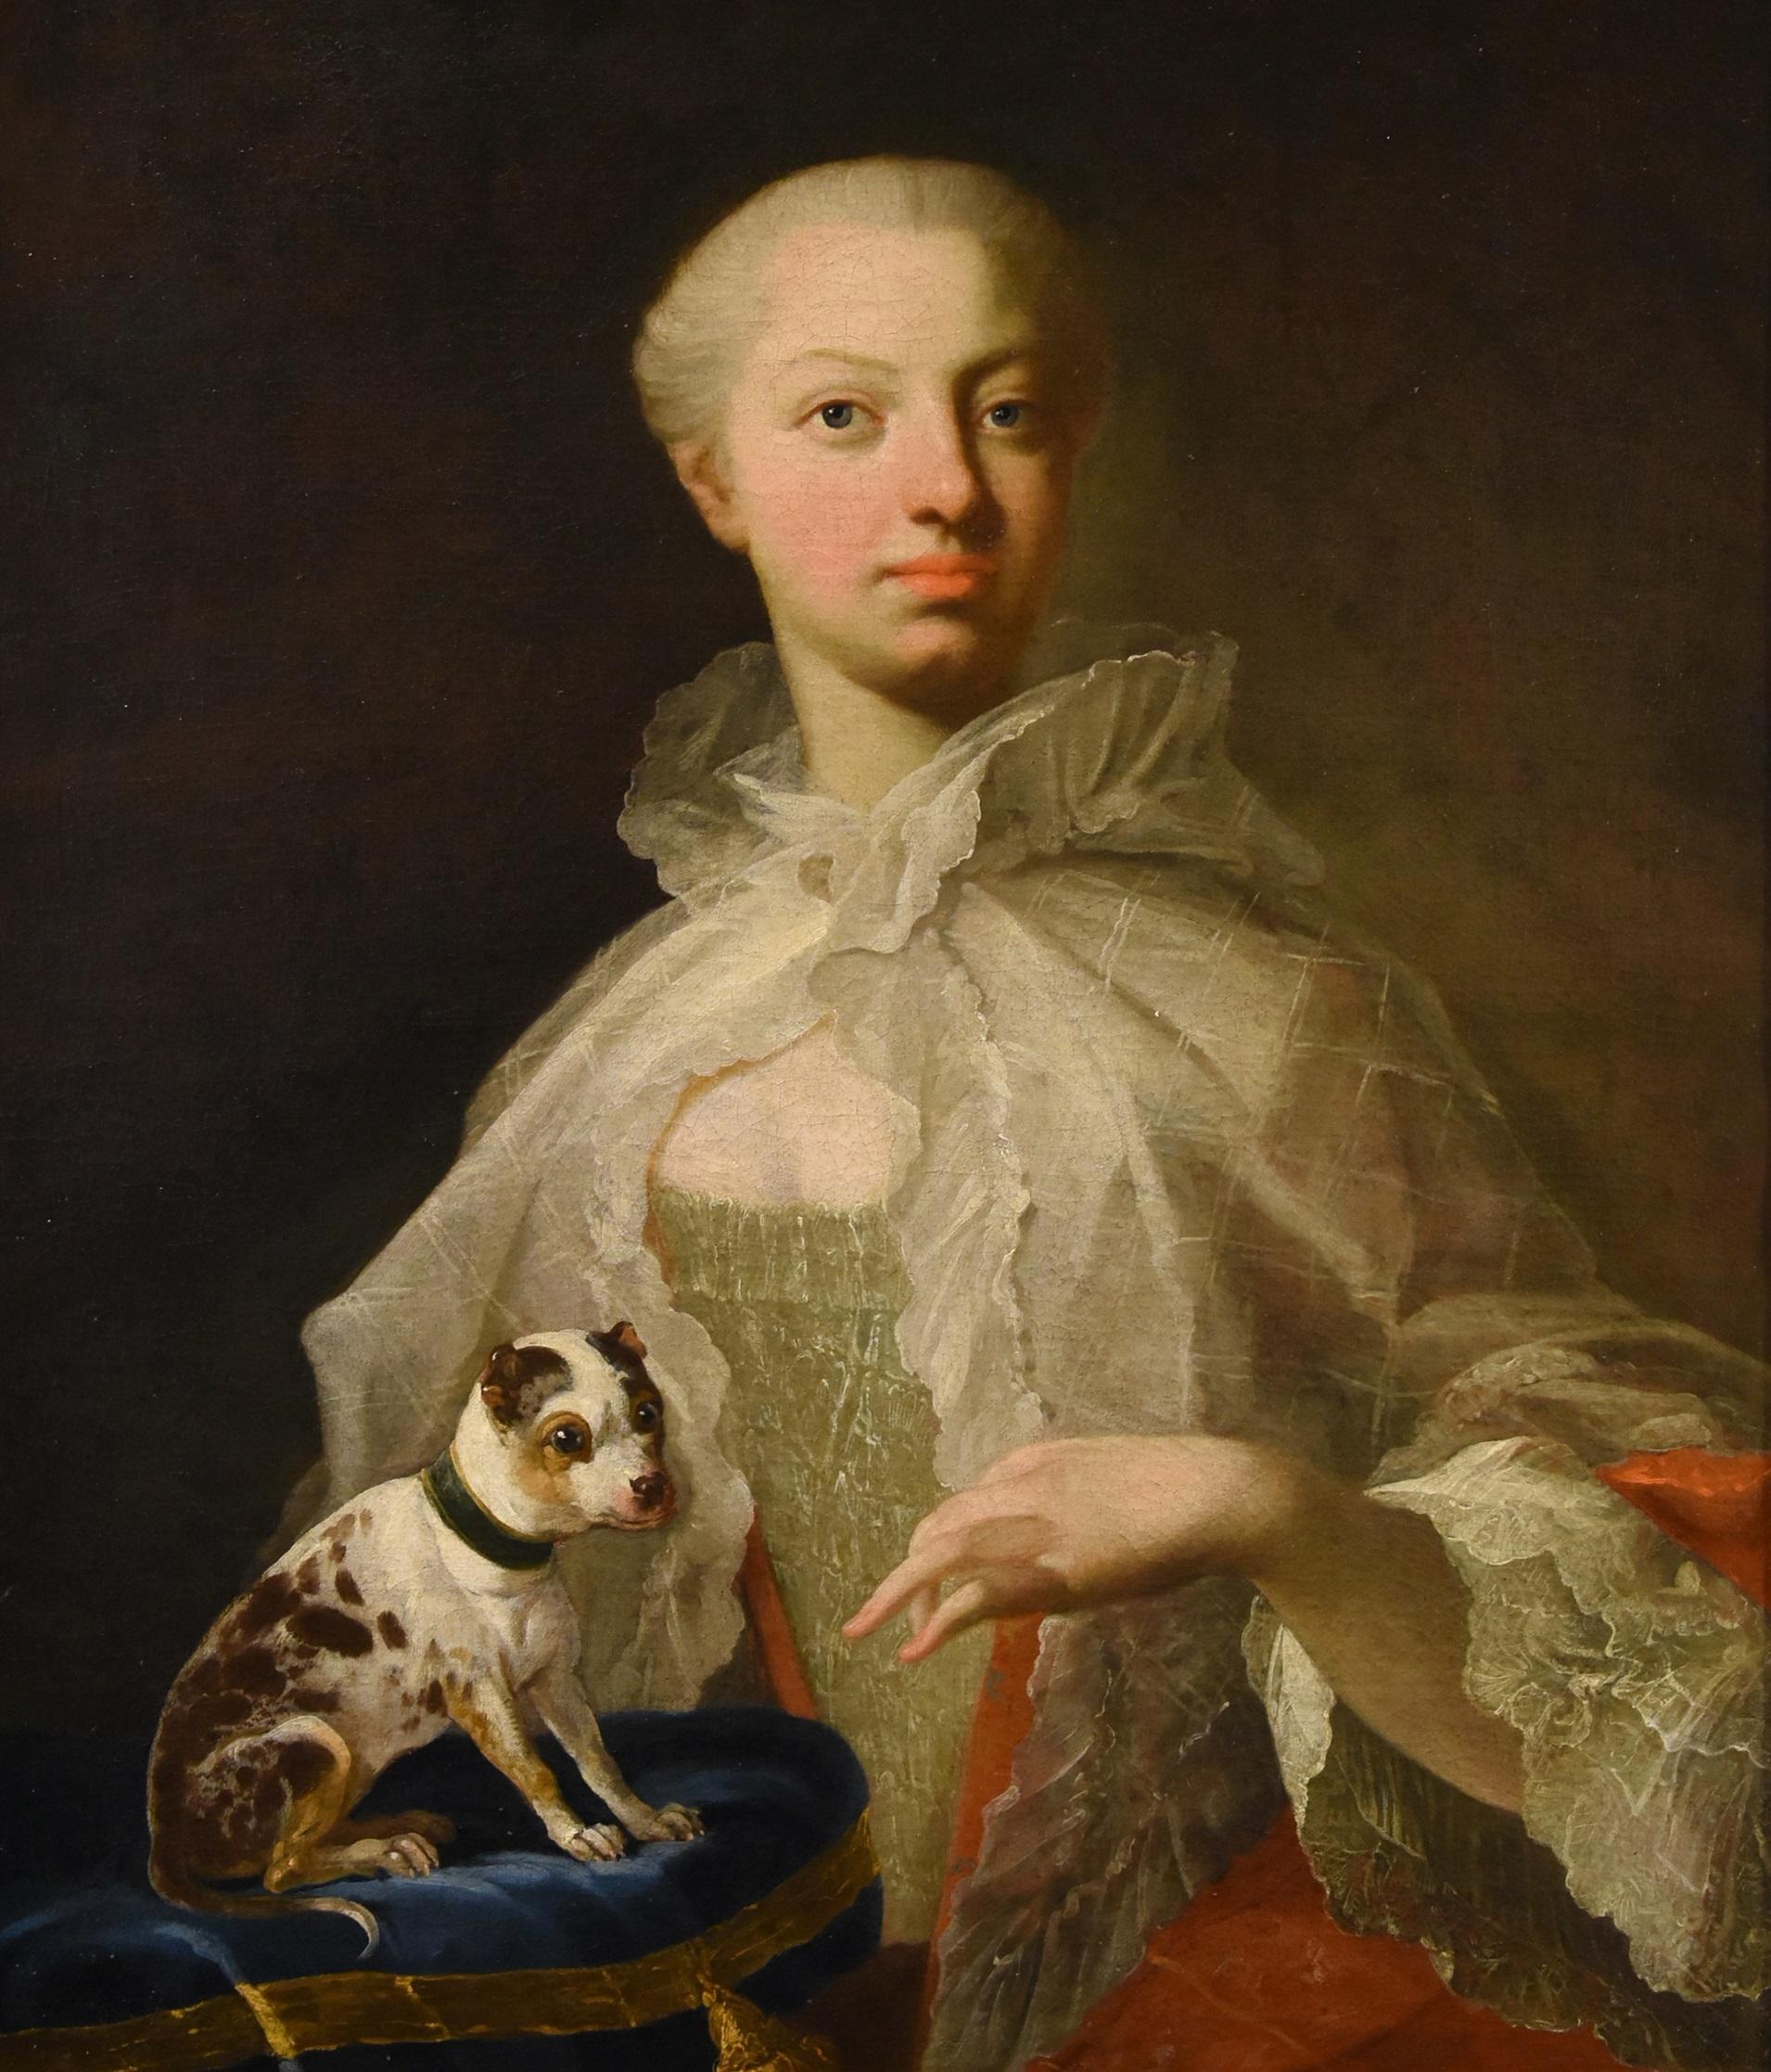 Portrait Noblewoman Dog Van Loo Paint 18th Century Oil on canvas Old master Art - Painting by Louis Michel Van Loo (toulon 1707- Paris 1771)